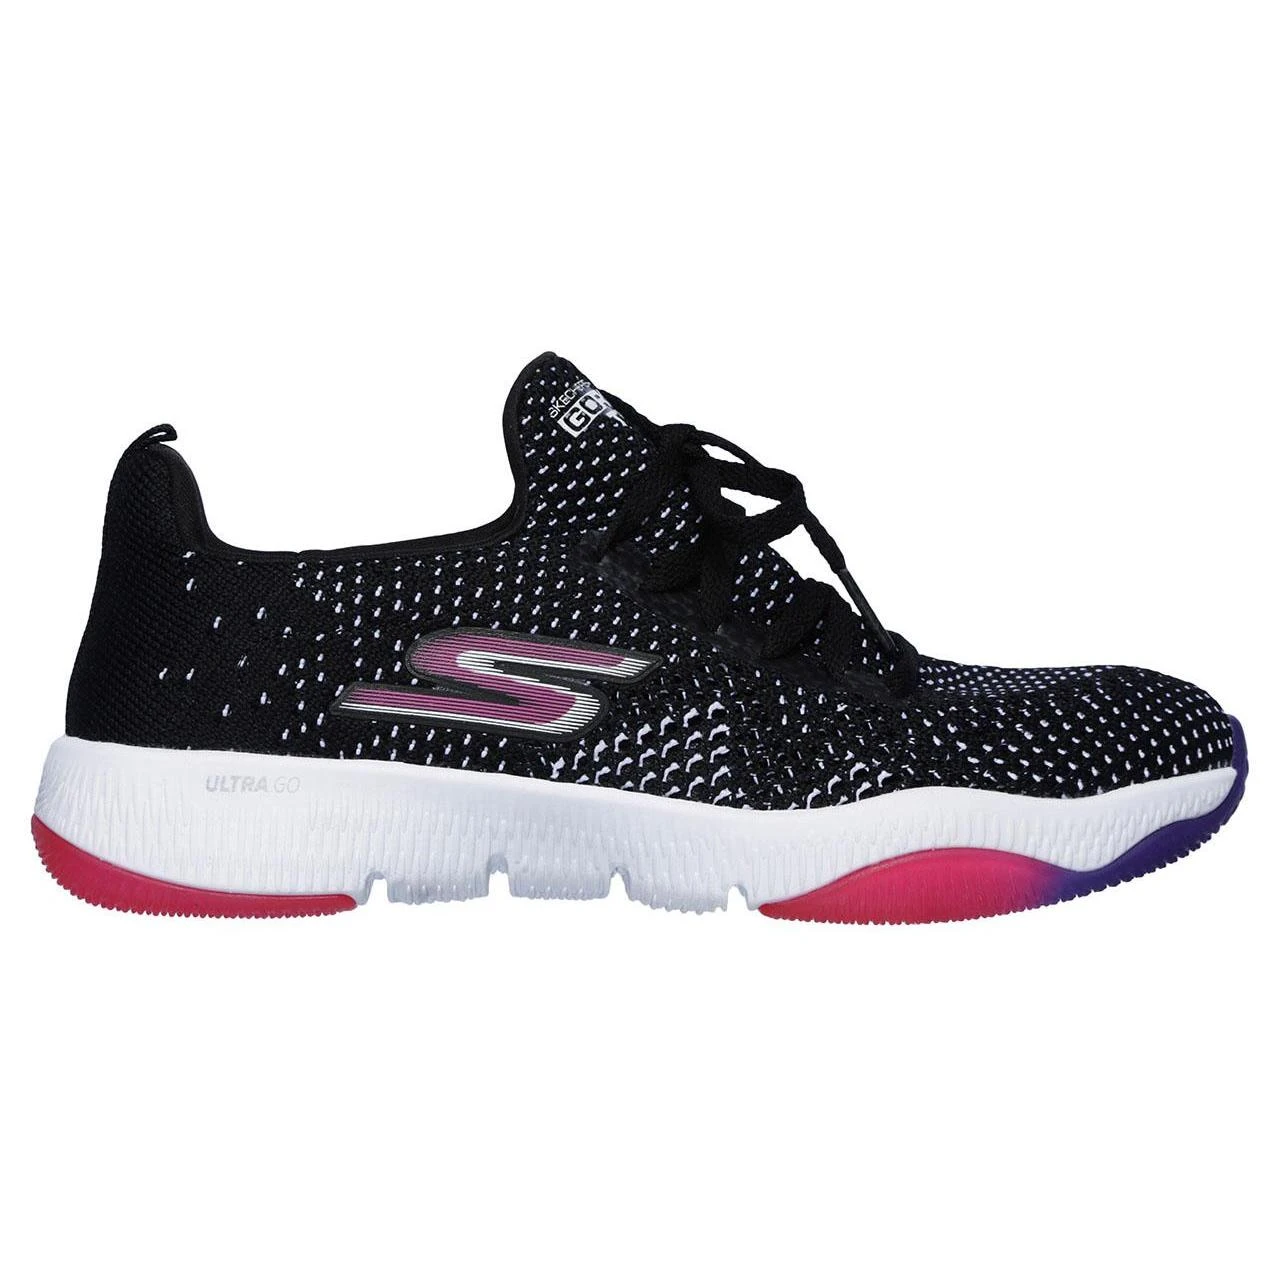 Clothing Women's Sports Black Skechers Multi-colored Shoes - AliExpress